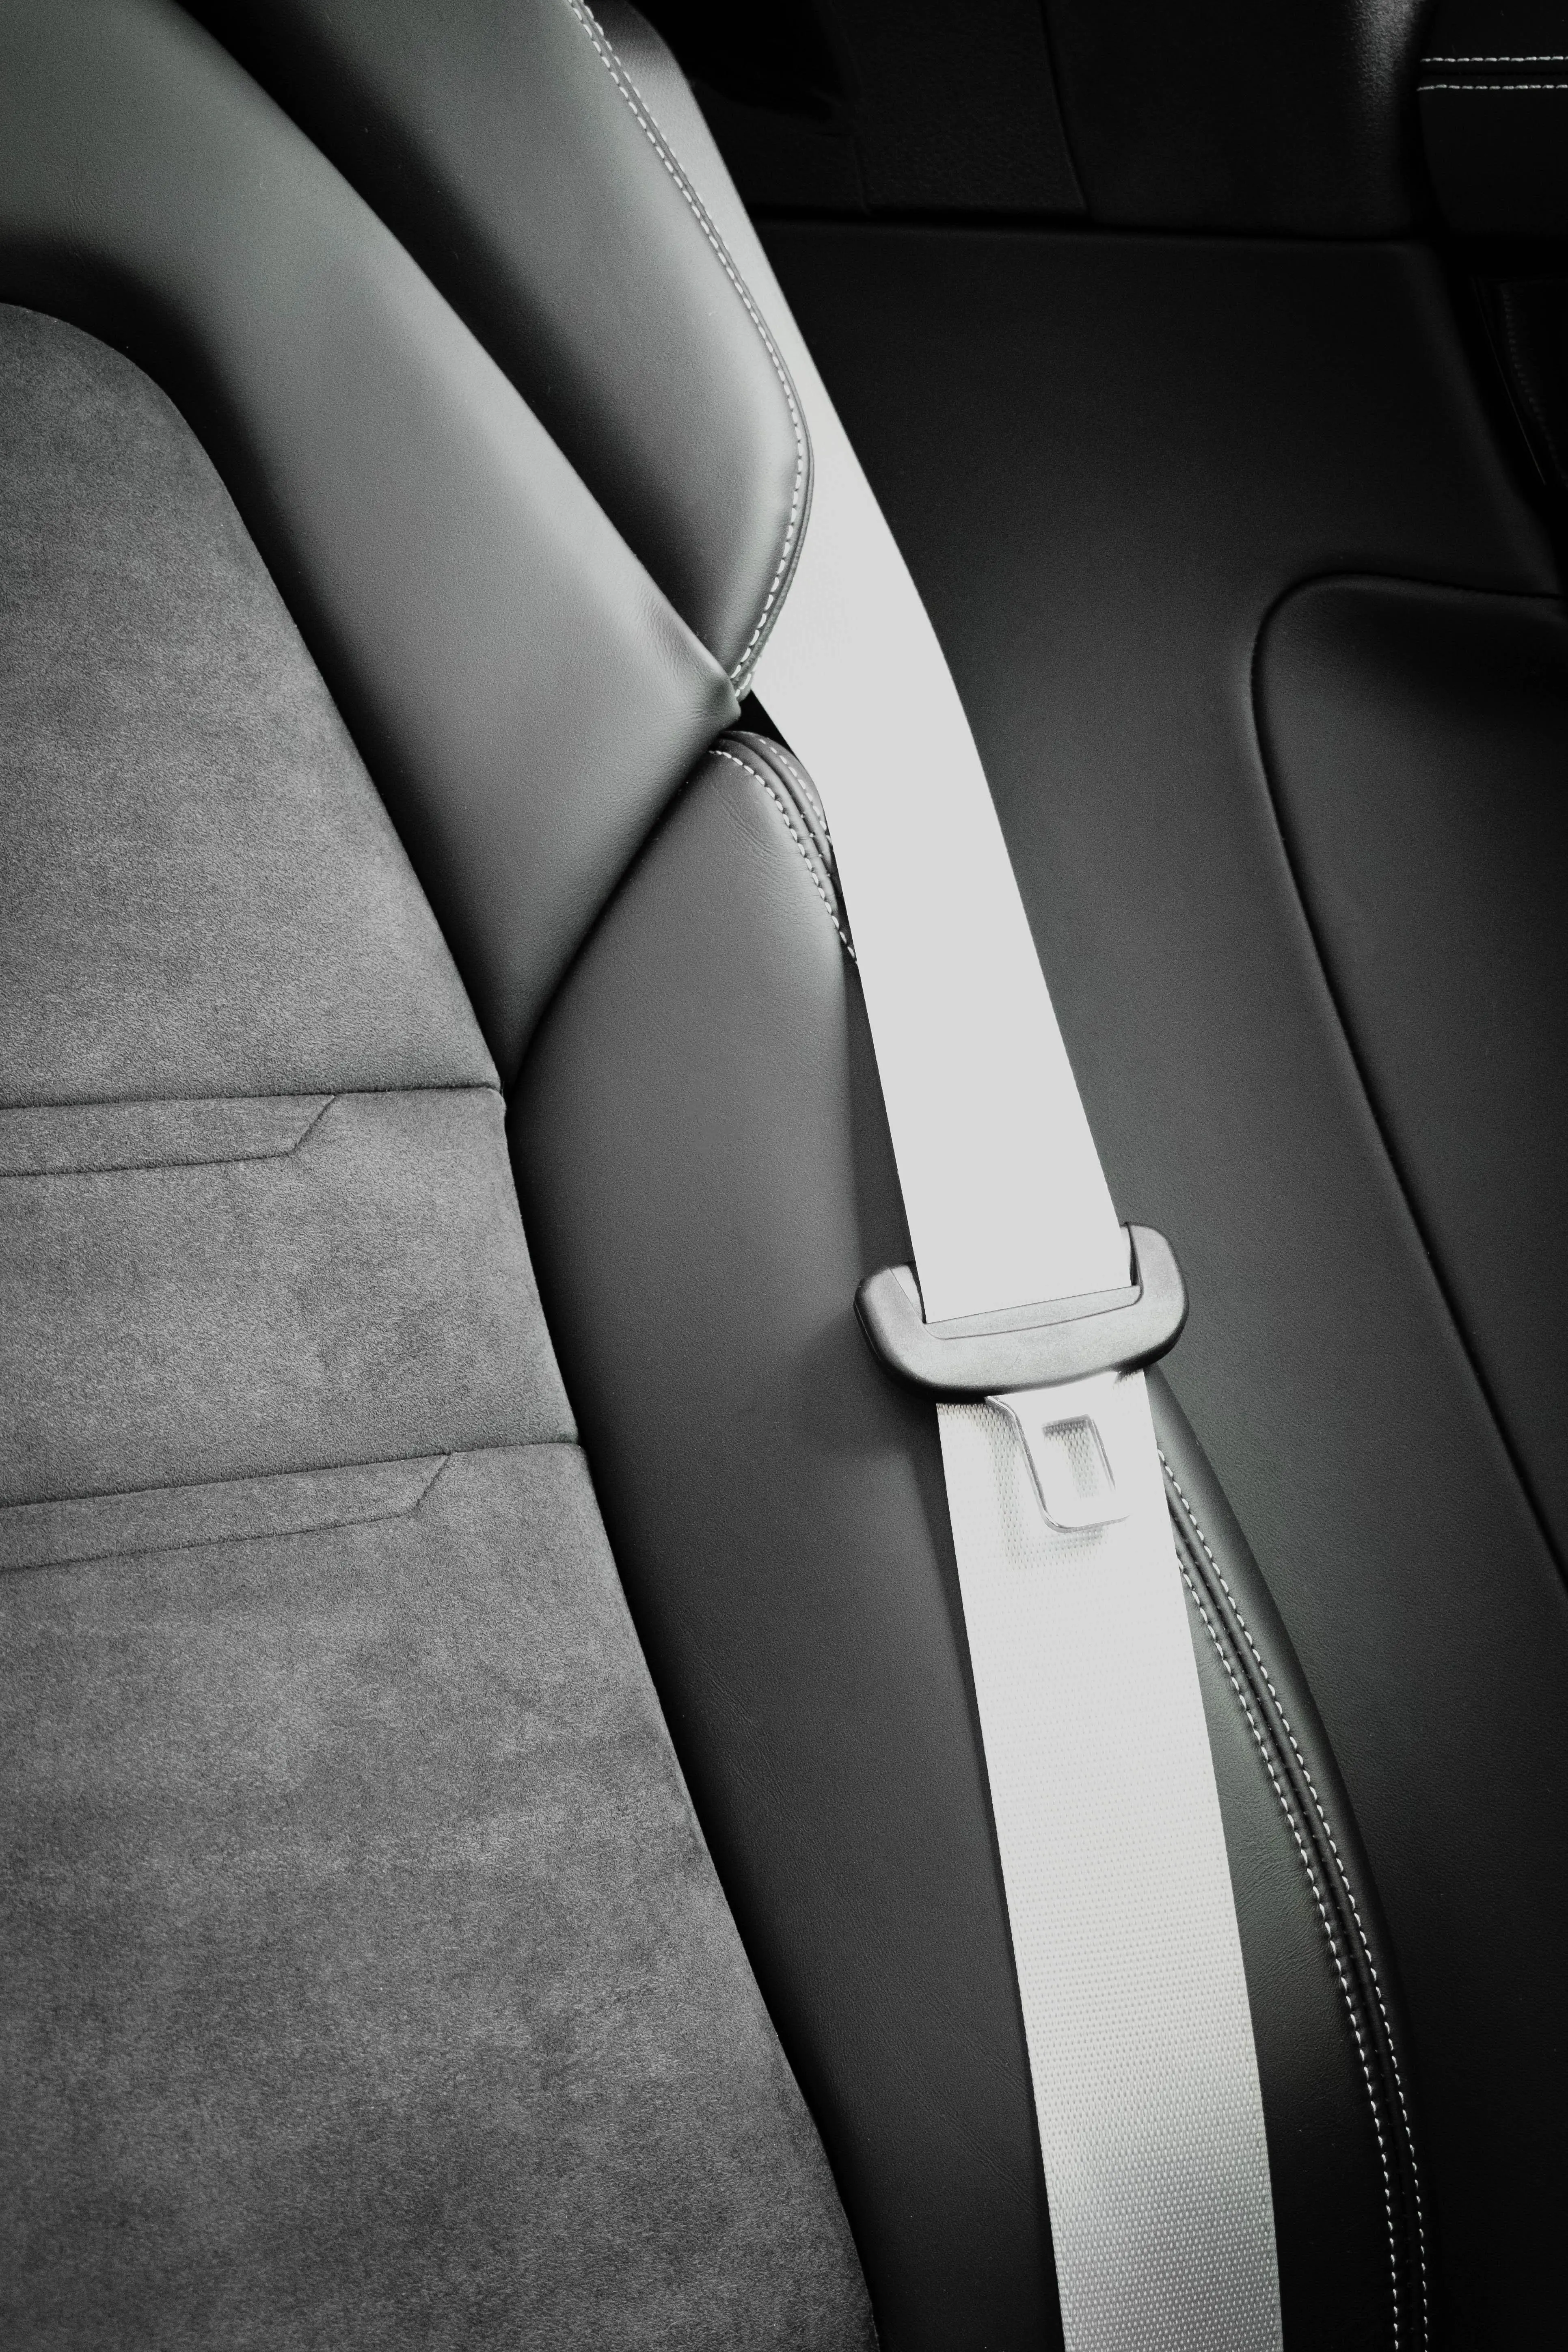 Image of a Car Seatbelt